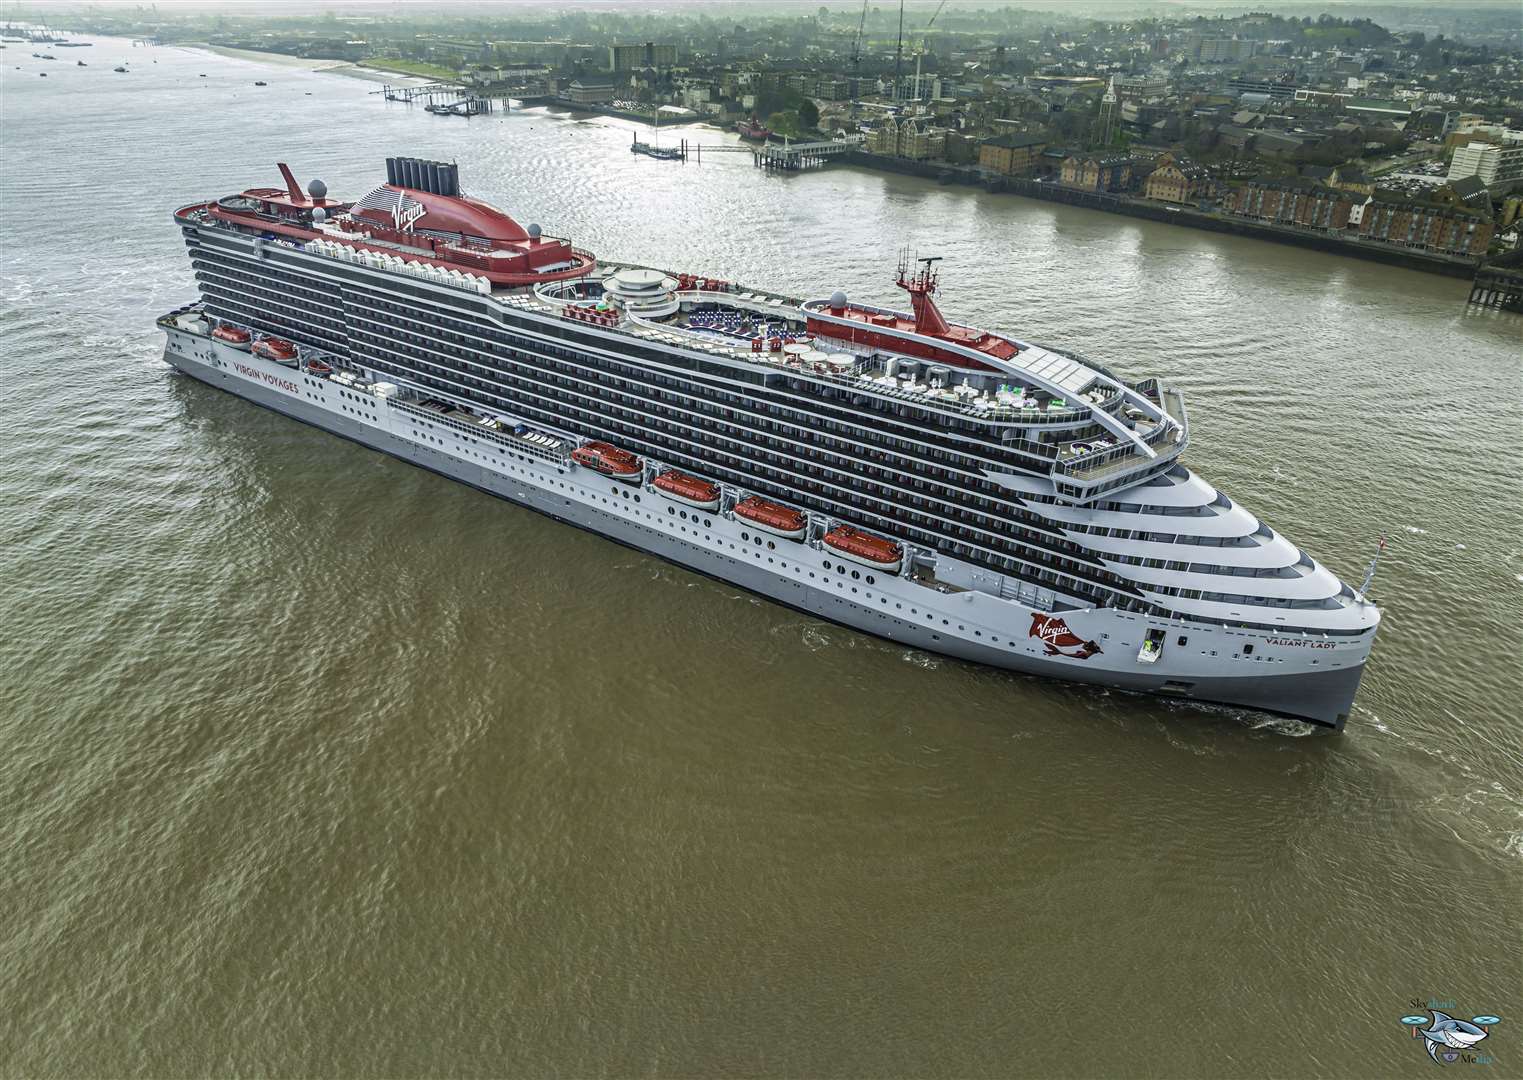 Virgin's Valiant Lady cruise ship docked off Gravesend. Picture: Mark Dillen / Skyshark Media